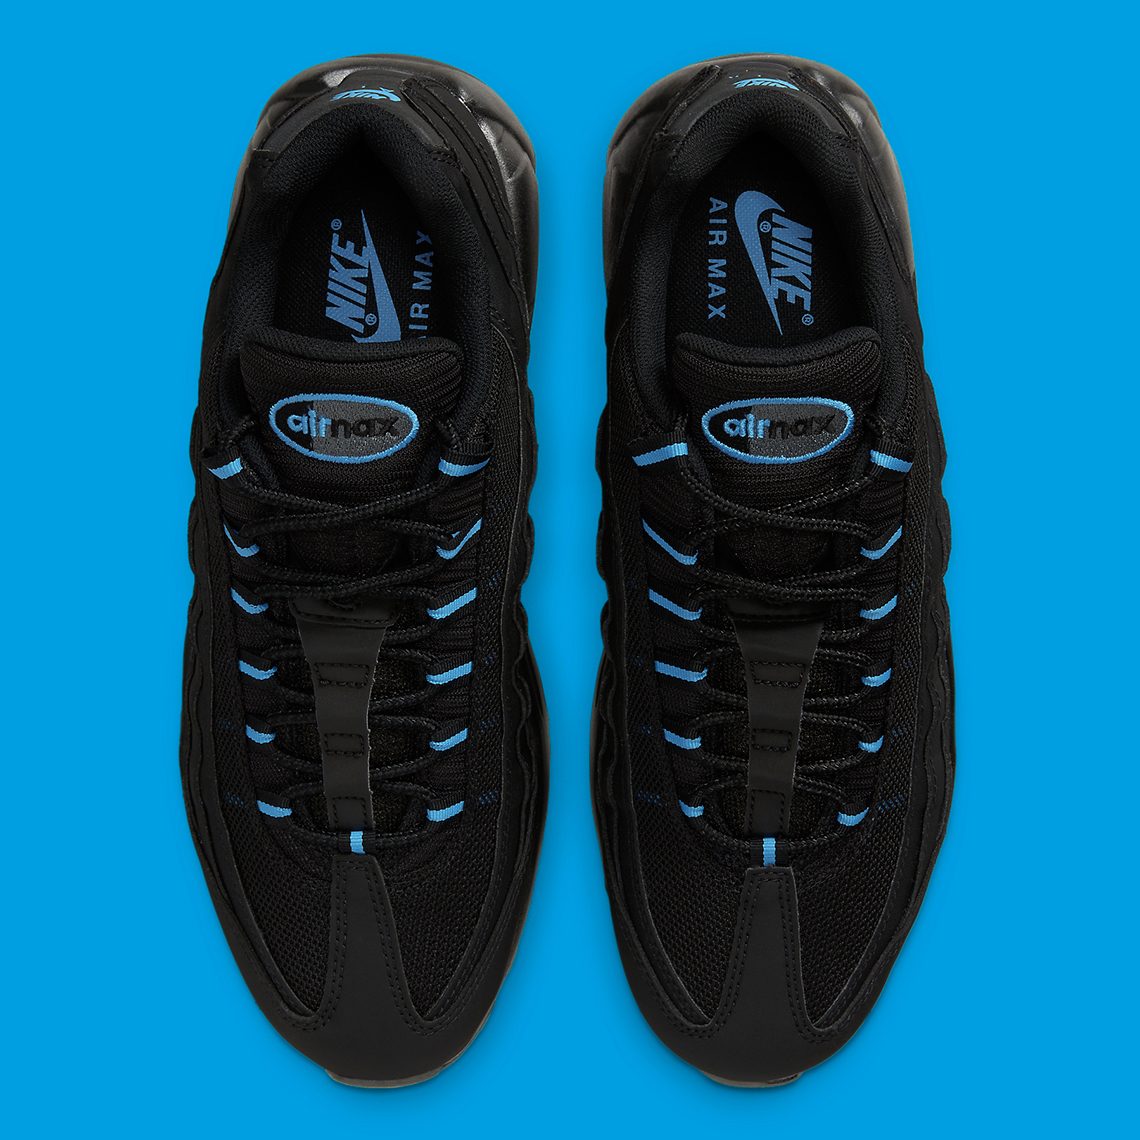 nike air thea men 9 inch women shoes size 95 Black University Blue Fj4217 002 8